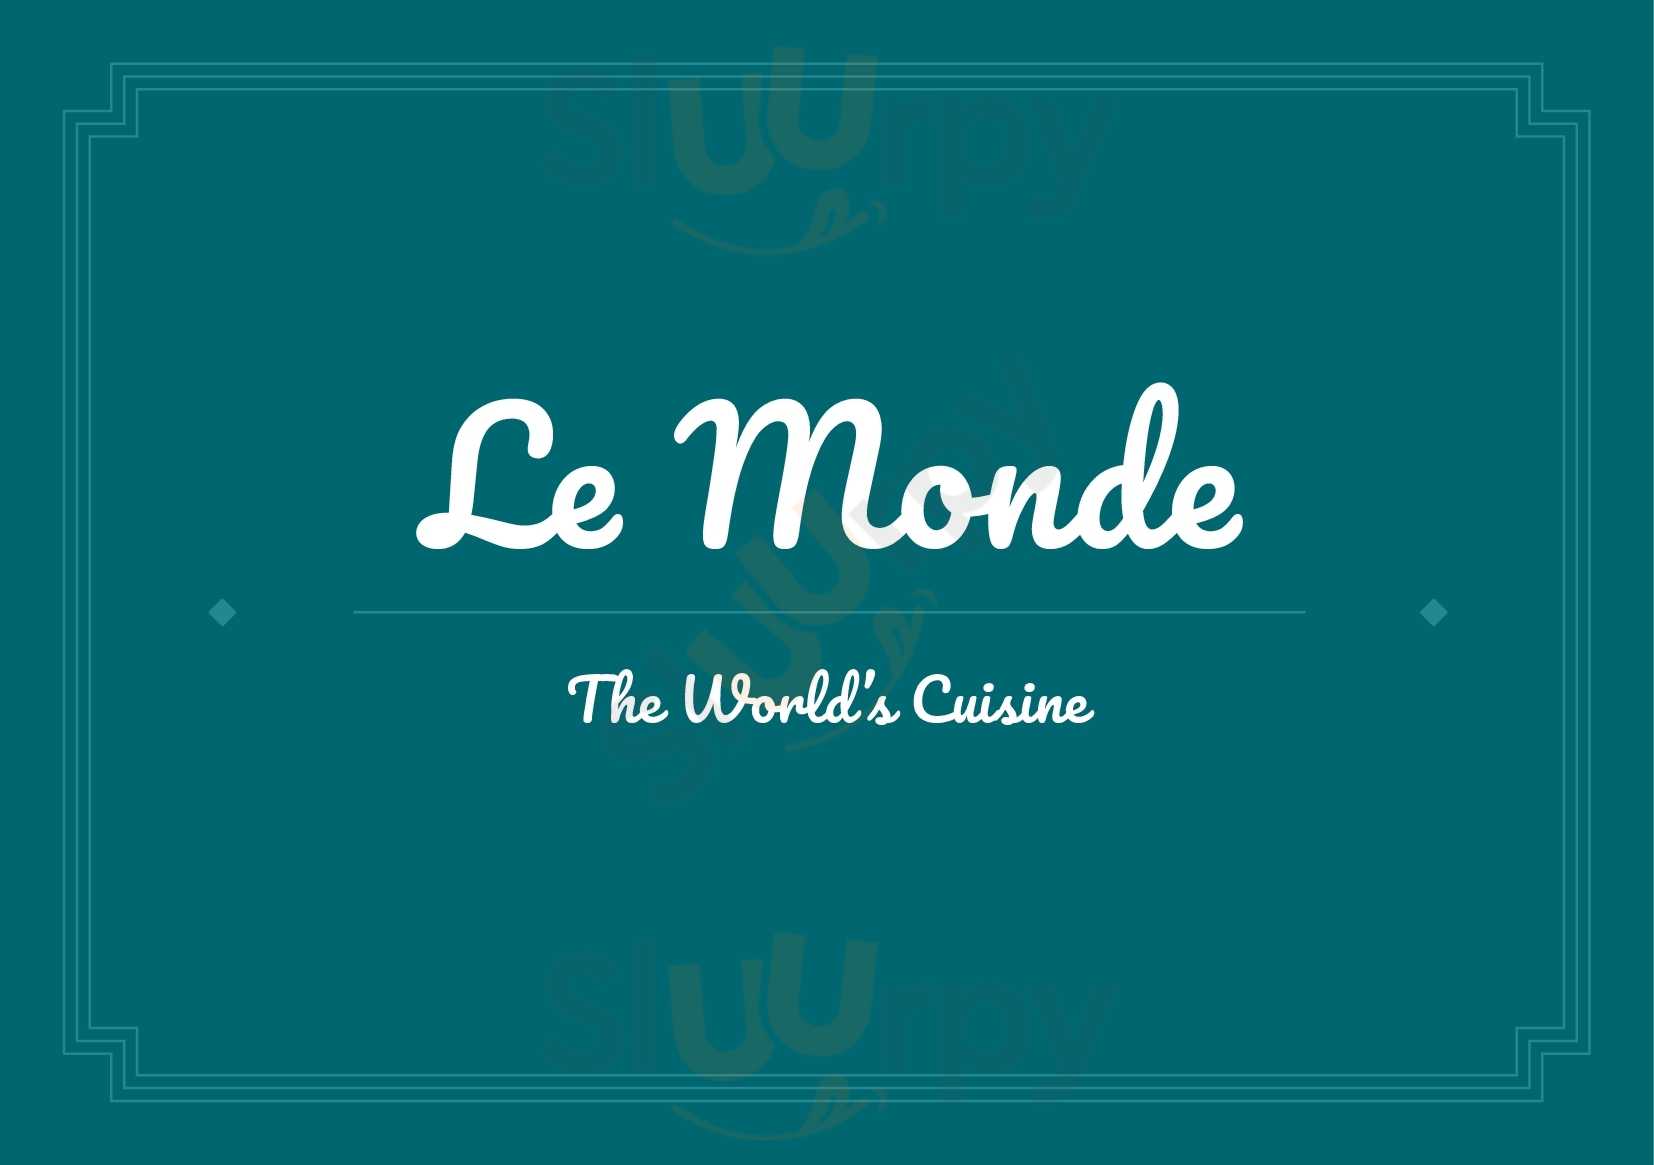 Le Monde - The World's Cuisine Dubendorf Menu - 1